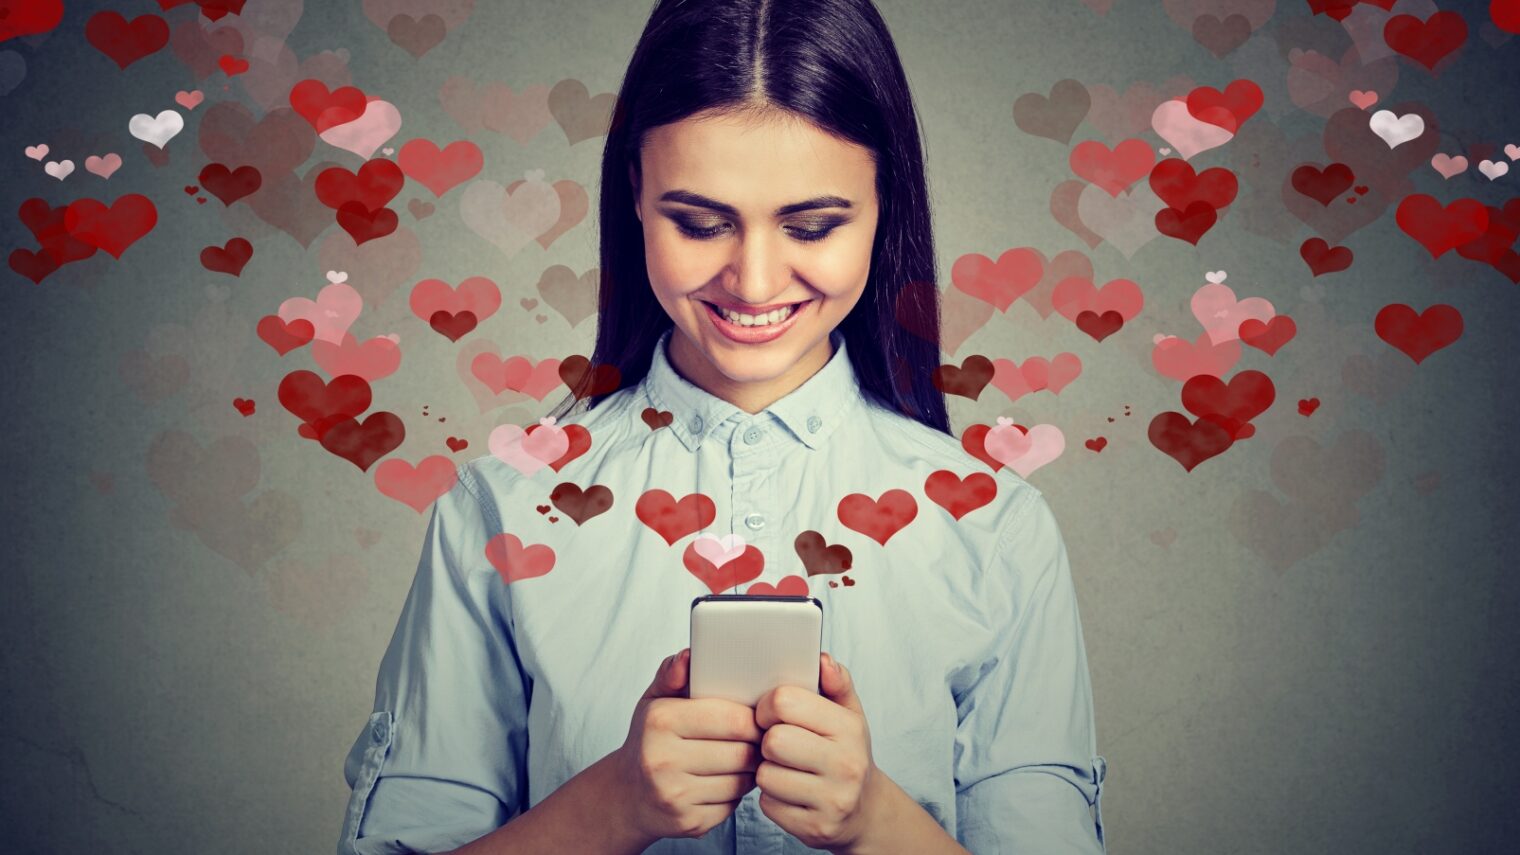 Dating app illustrative photo via Shutterstock.com